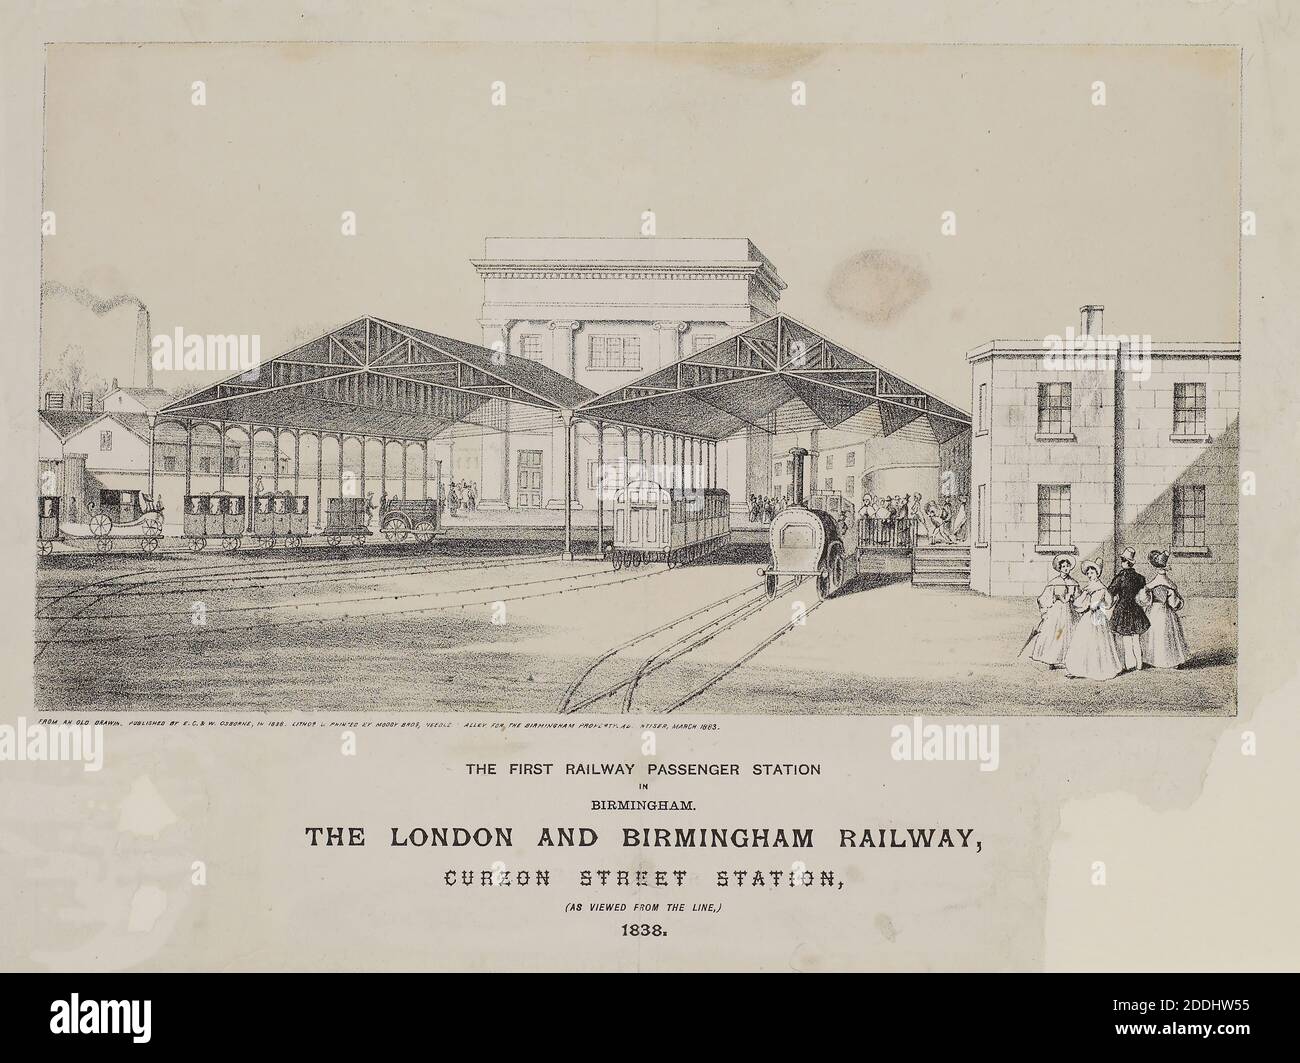 The London & Birmingham Railway, Curzon Street Station, 1838 Publisher: E C & W Osborne Printer: E Y Moody Bros, Science and Industry, Printing, Lithography, Birmingham history, Railway, Transport, Train Stock Photo